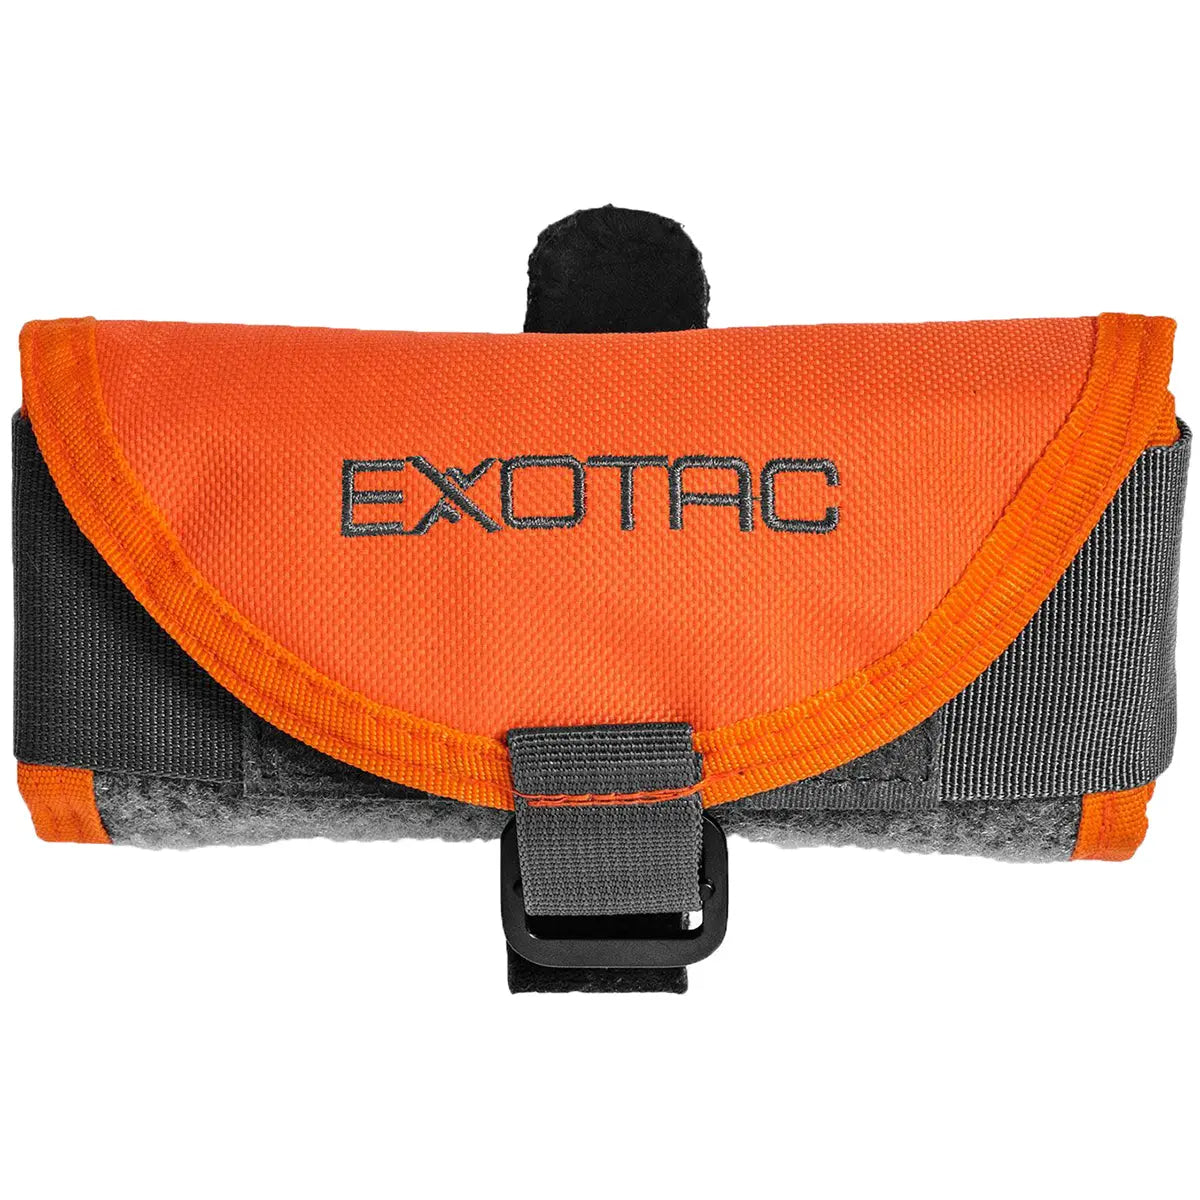 Exotac toolROLL Fire Starter Gear Carrier - Black/Orange Exotac